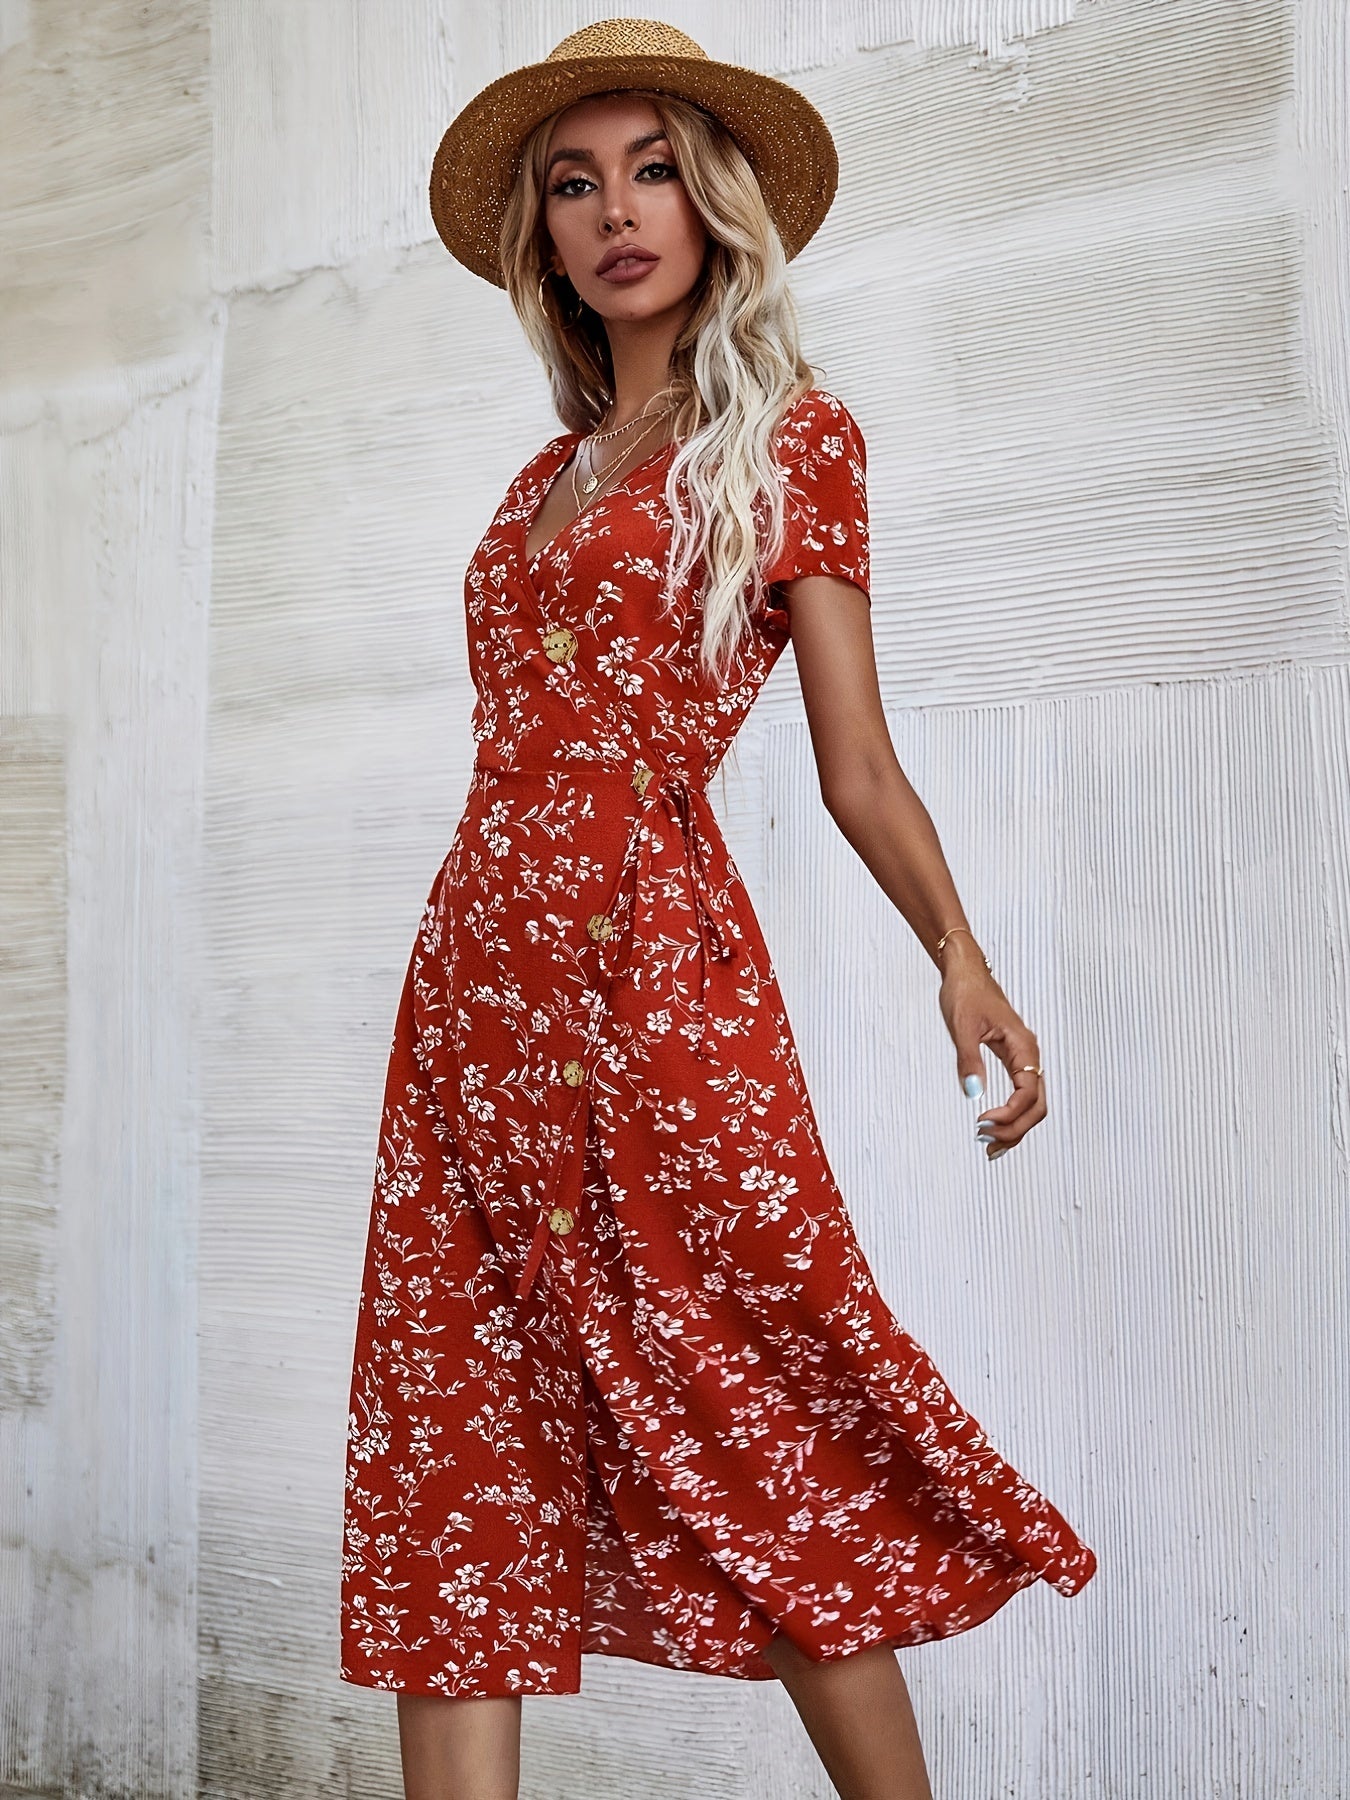 Bohemian Floral Print V Neck Dress For Spring & Summer, Women's Clothing